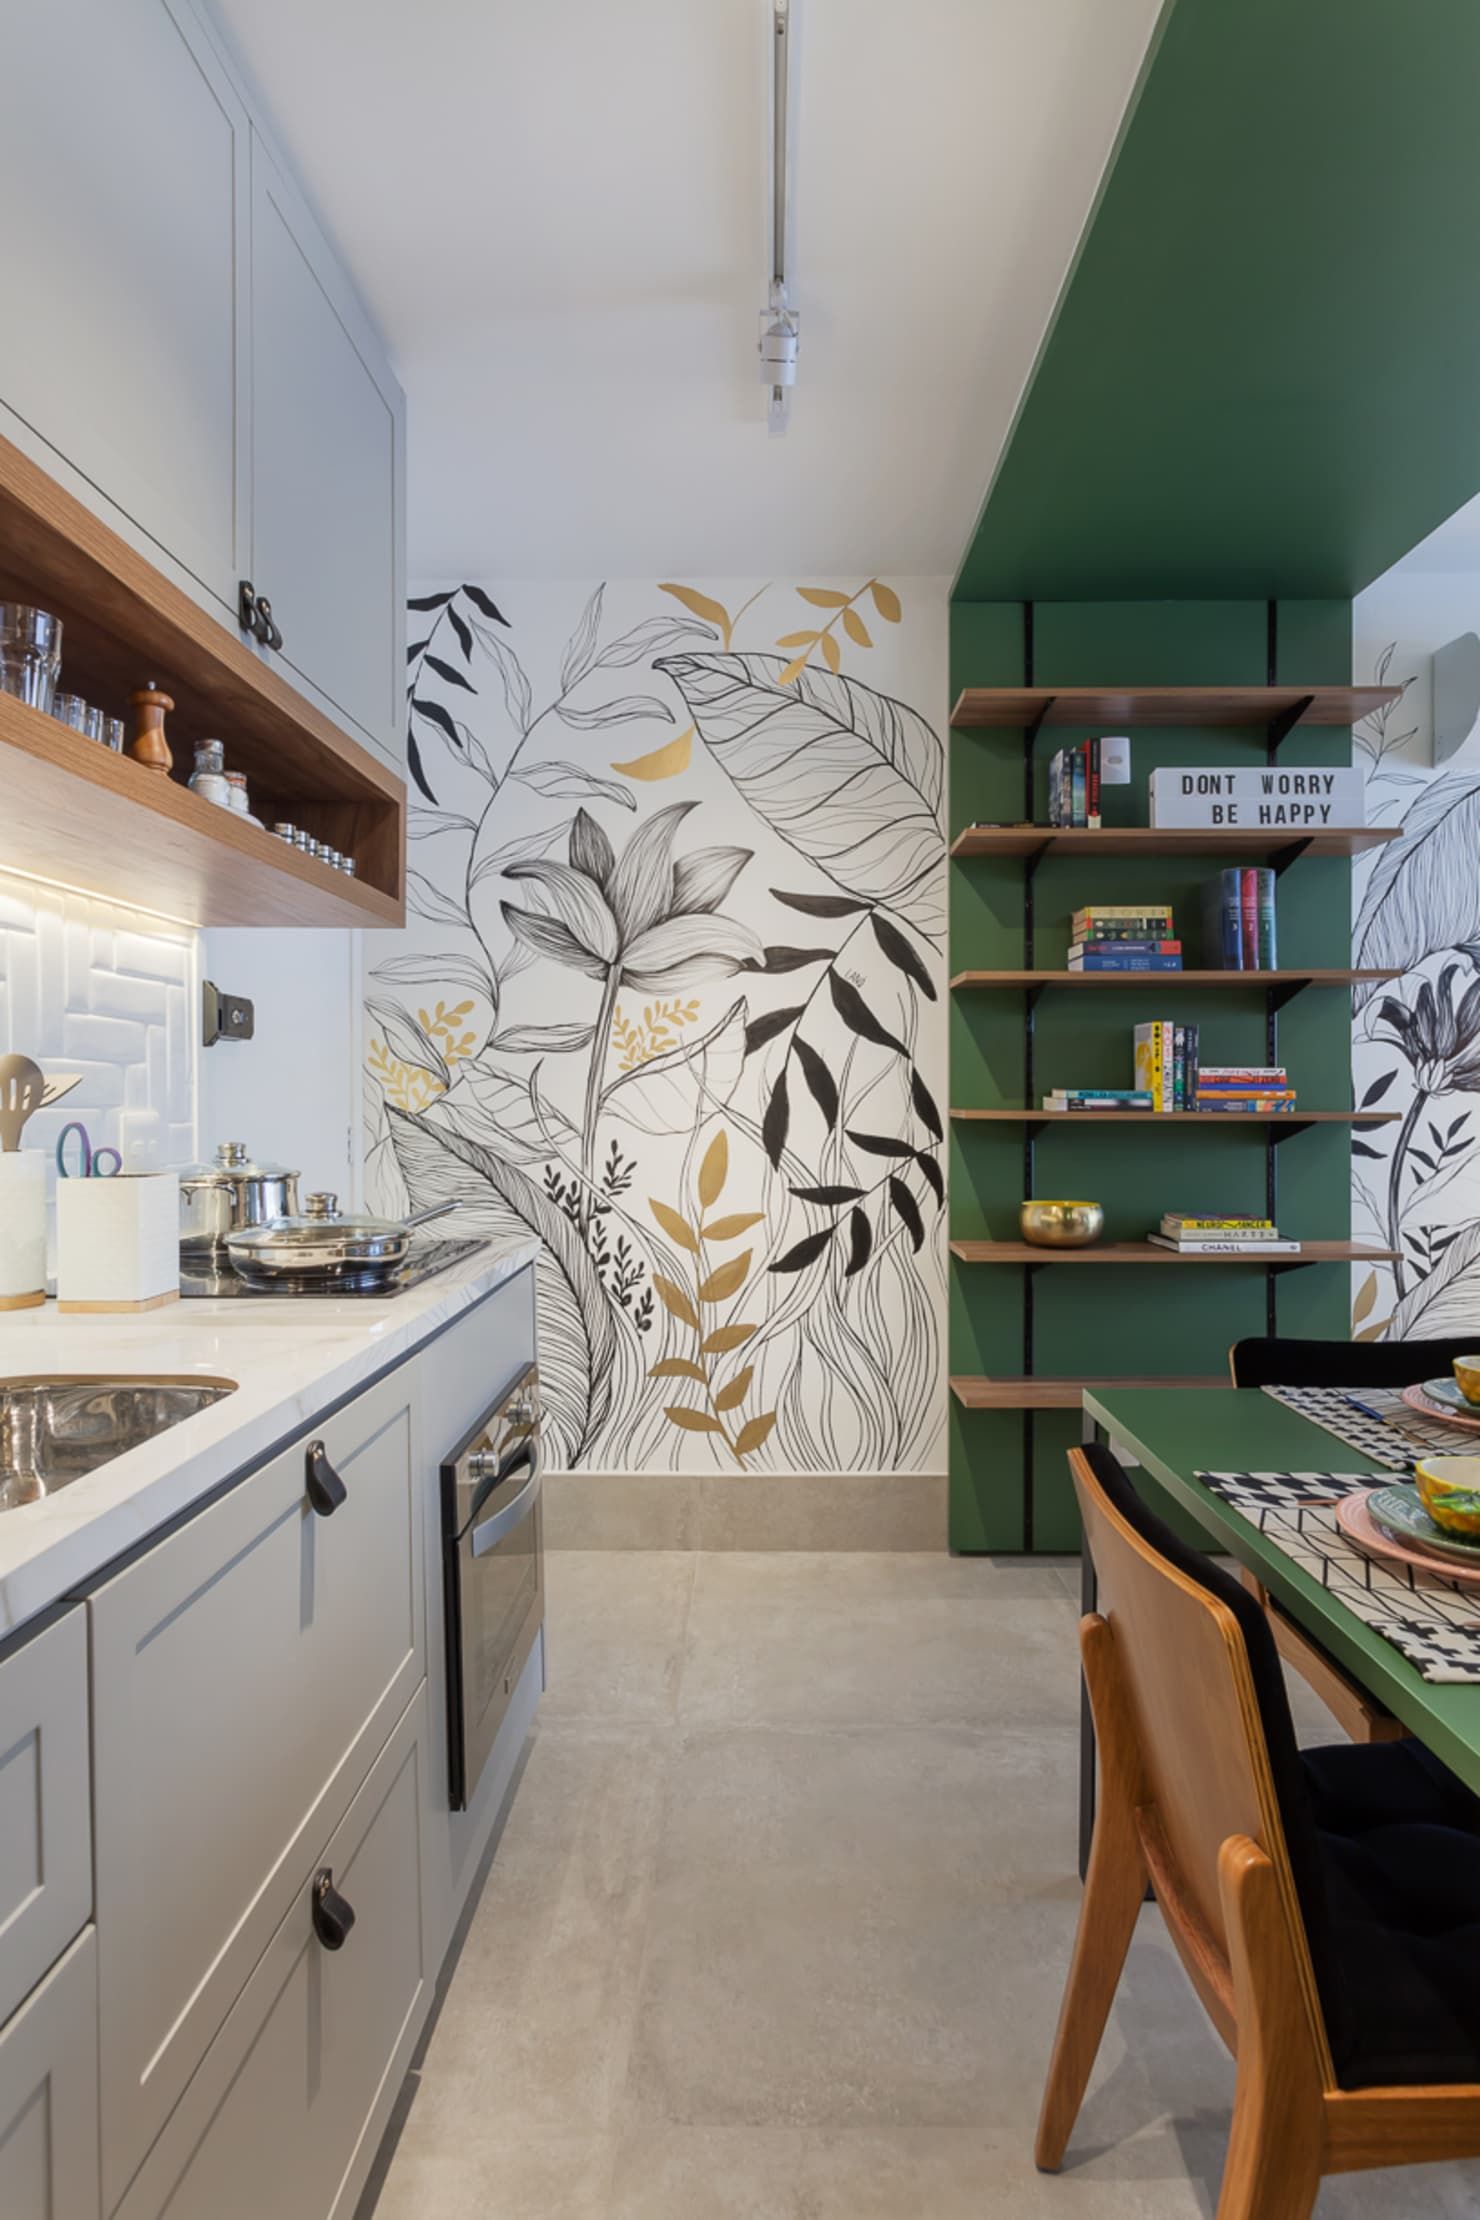 Innovative Ideas for Kitchen Wallpaper Design  DesignCafe